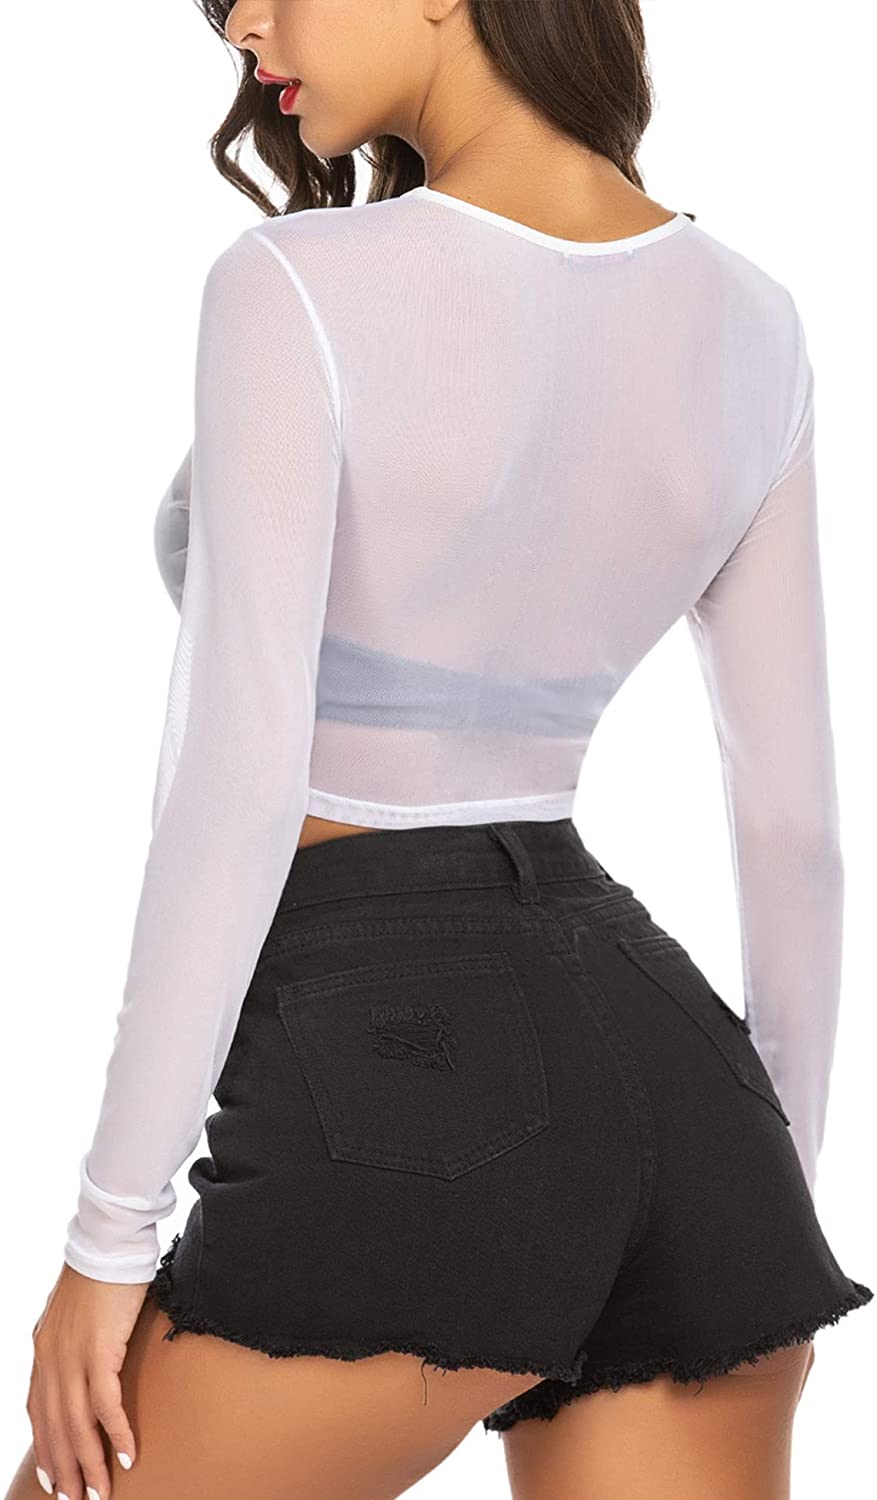 Avidlove Women Mesh Crop Top Long Sleeve See Through Shirt Sheer Blouse S 4xl Ebay 